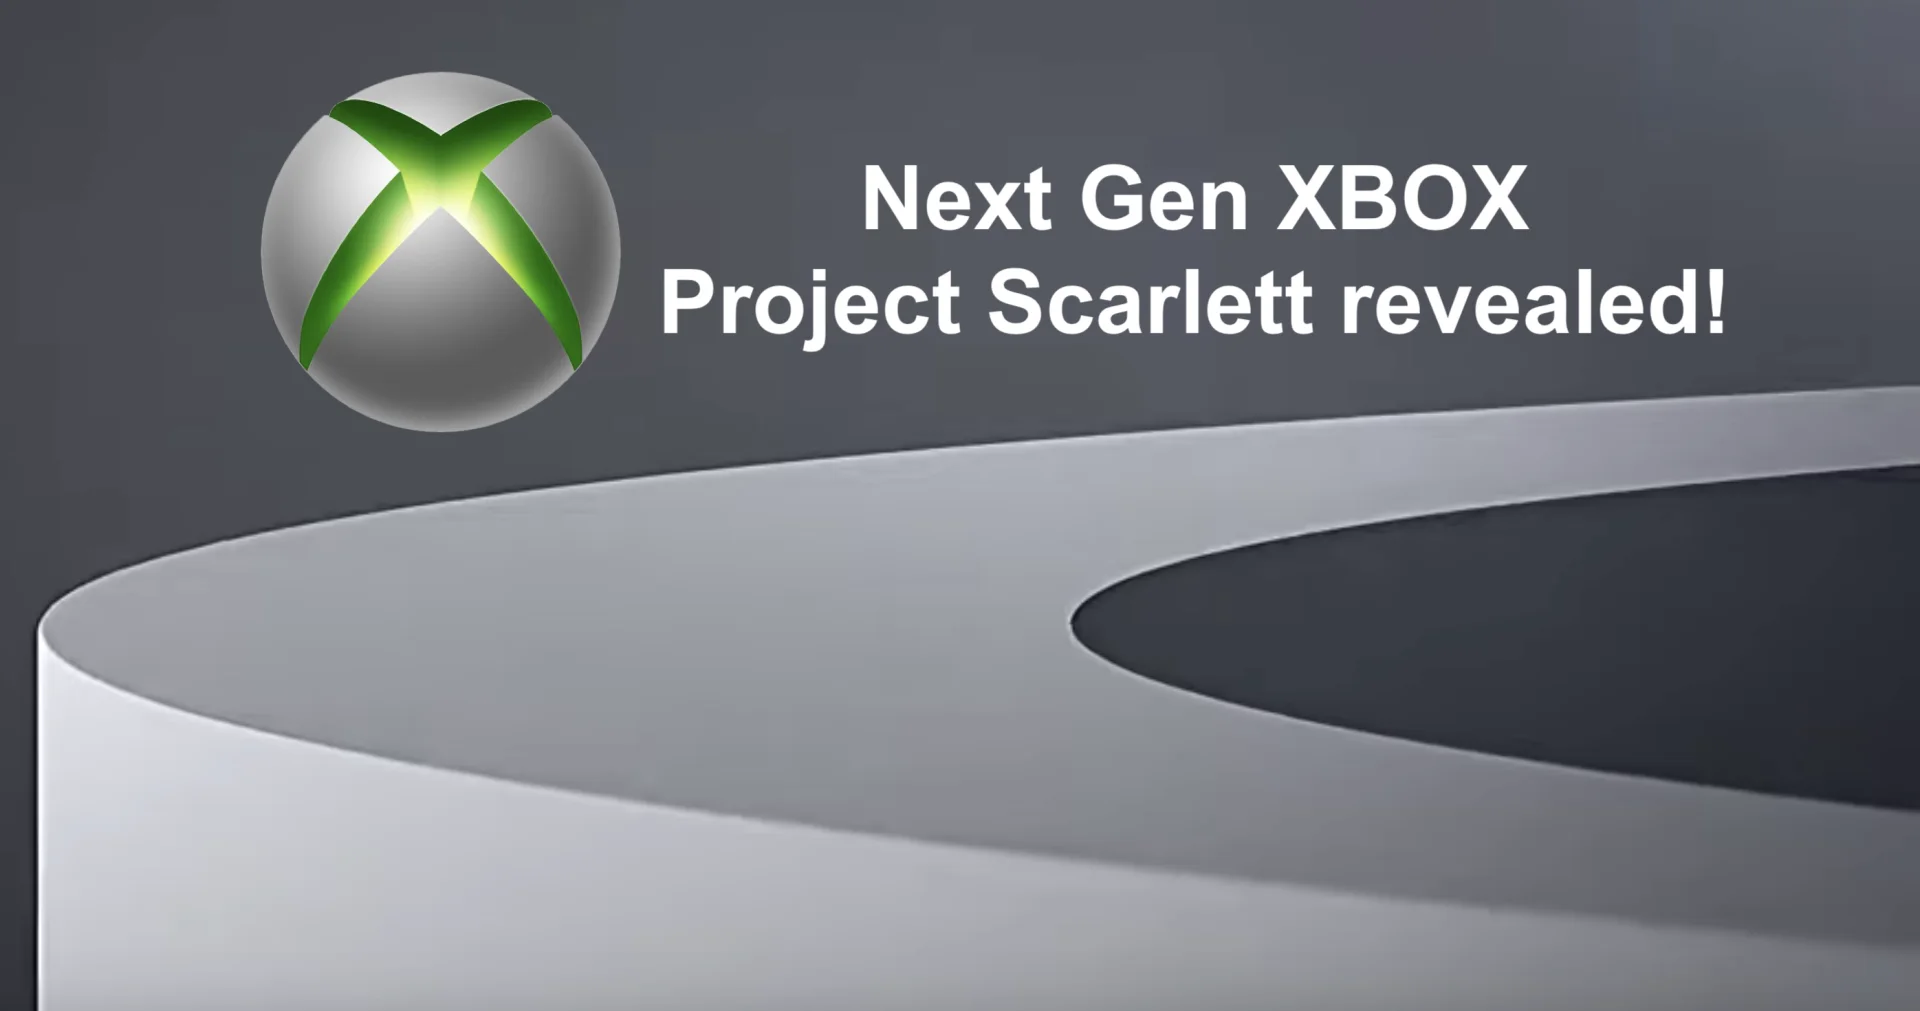 Project Scarlett - Microsoft's next generation XBOX console announced